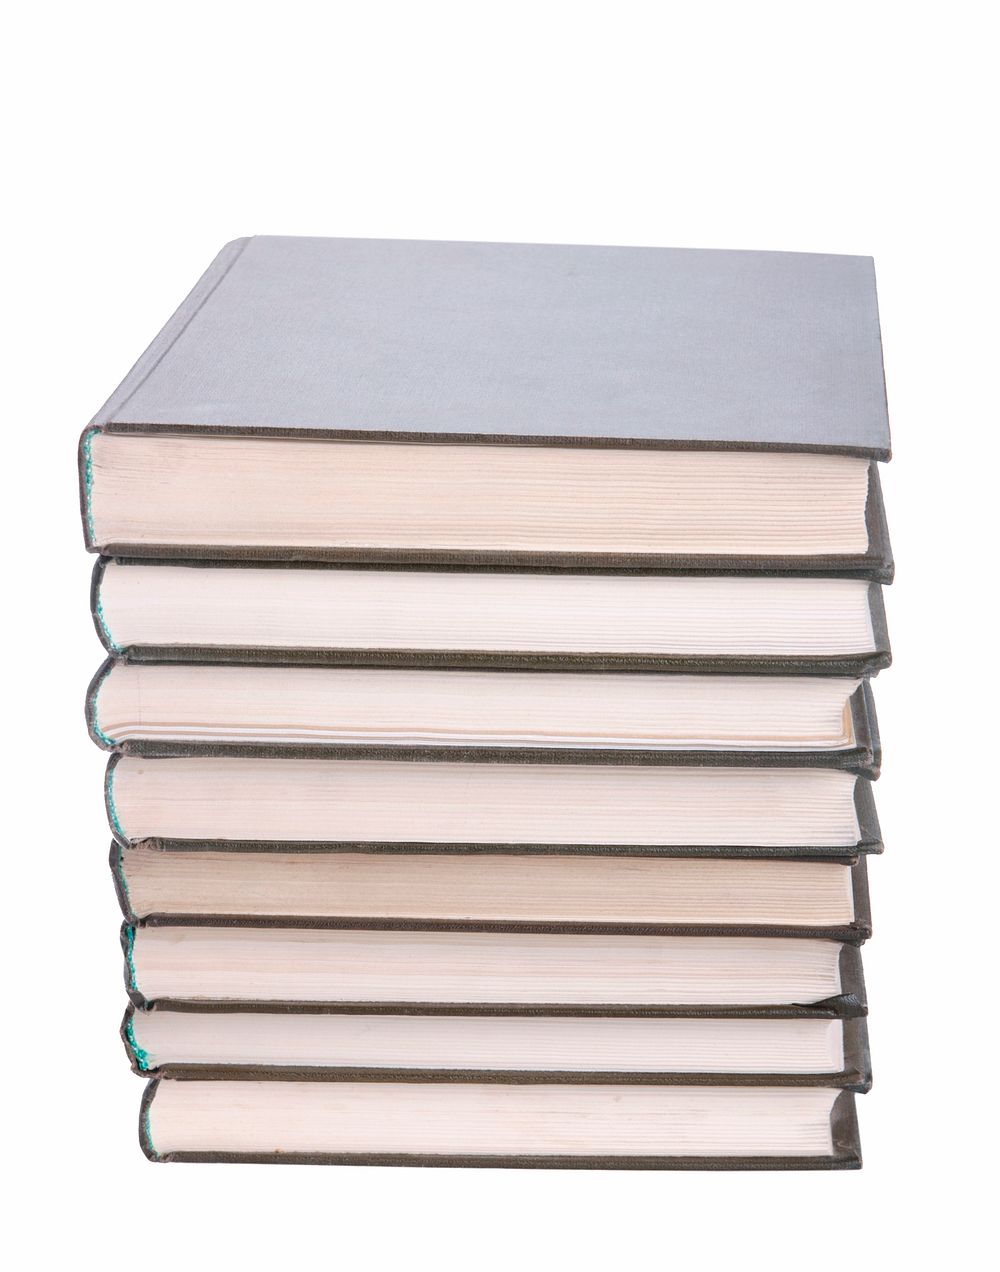 Free pile of books photo, public domain CC0 image.